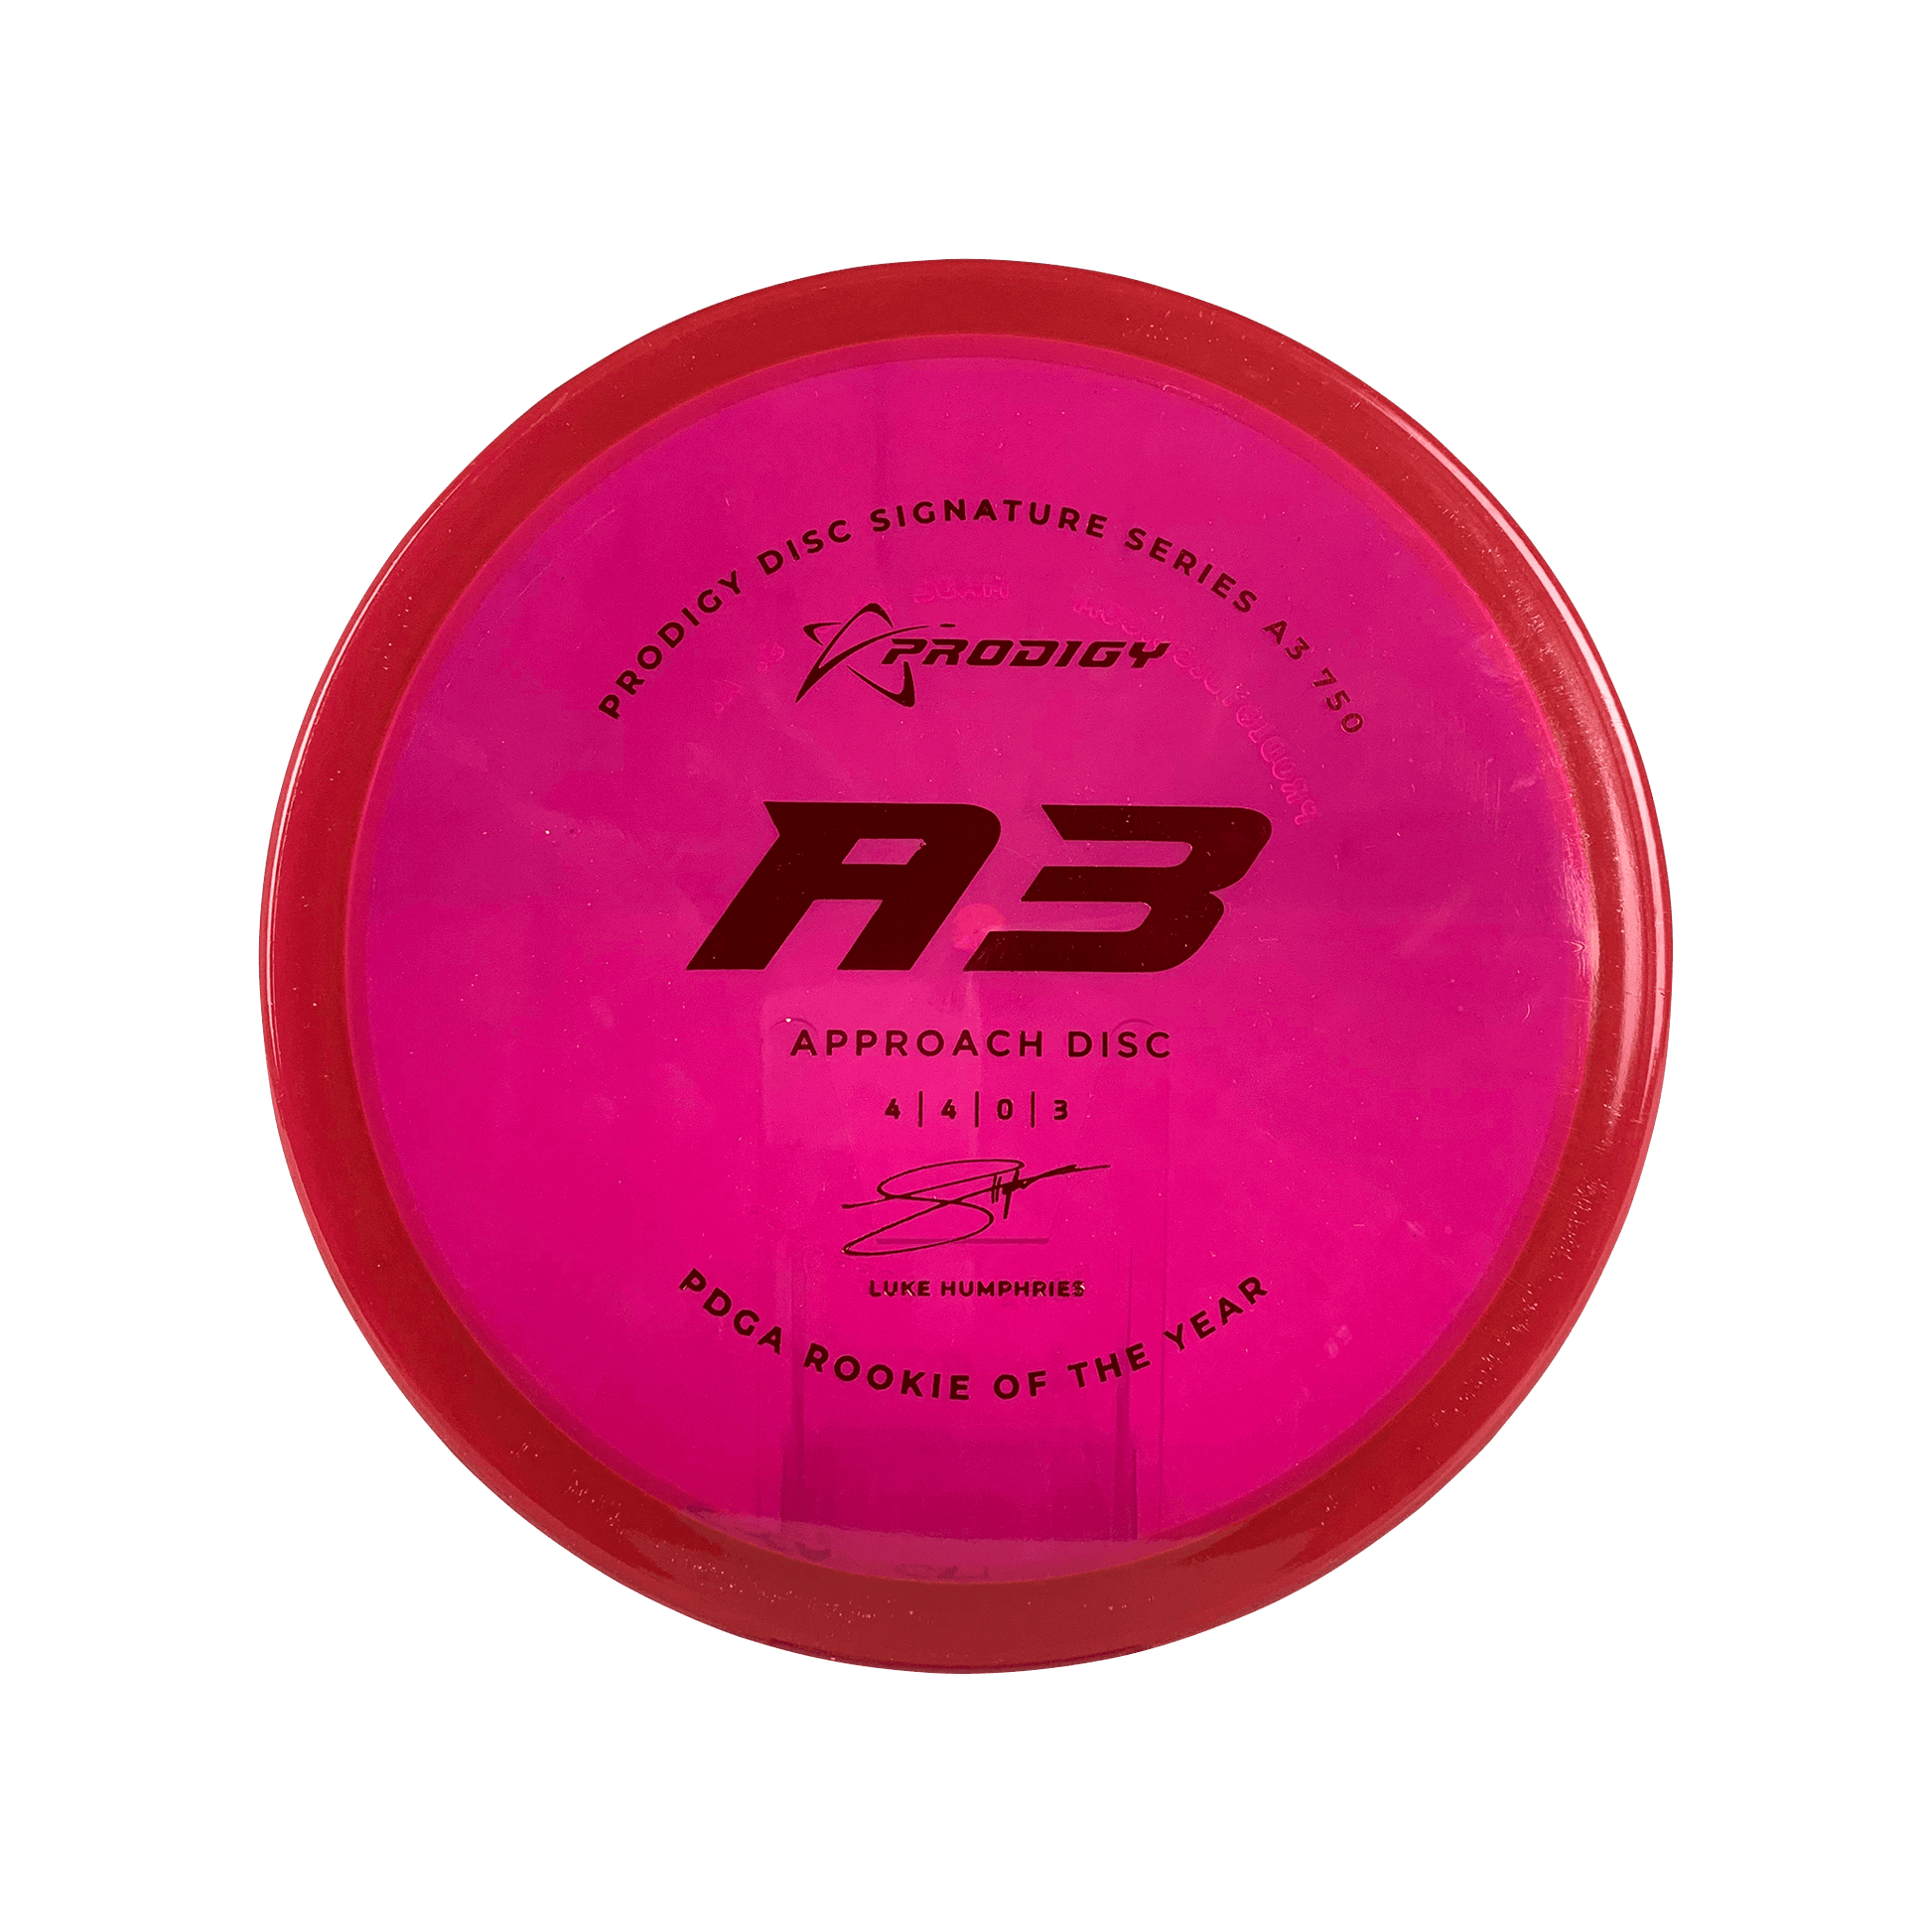 750 A3 - Luke Humphries Signature Series Disc Prodigy red 172 